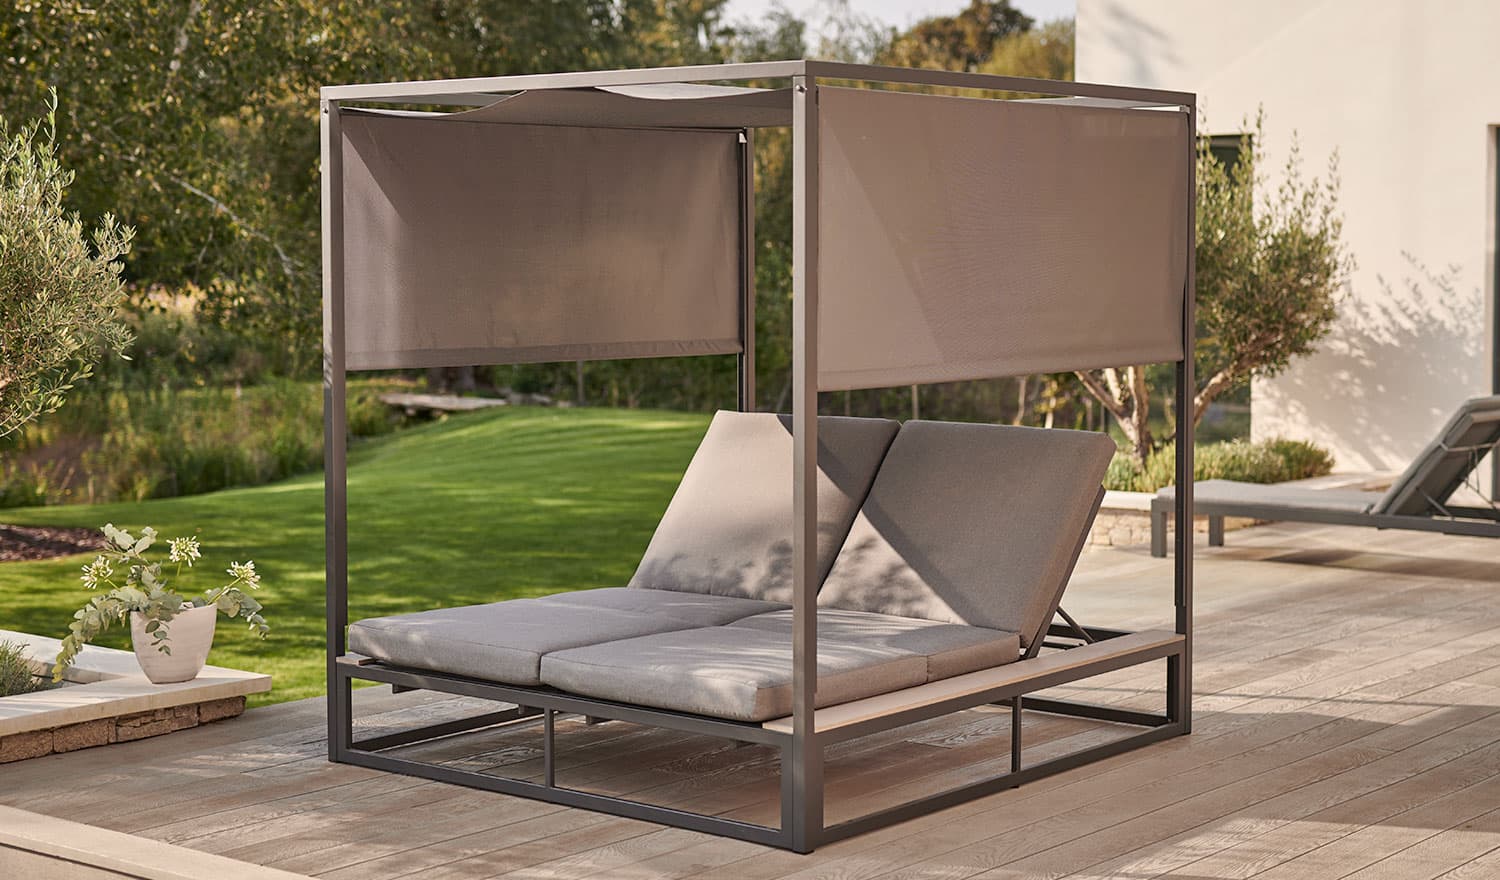 Garden furniture trends for summer 2022: Daybeds 